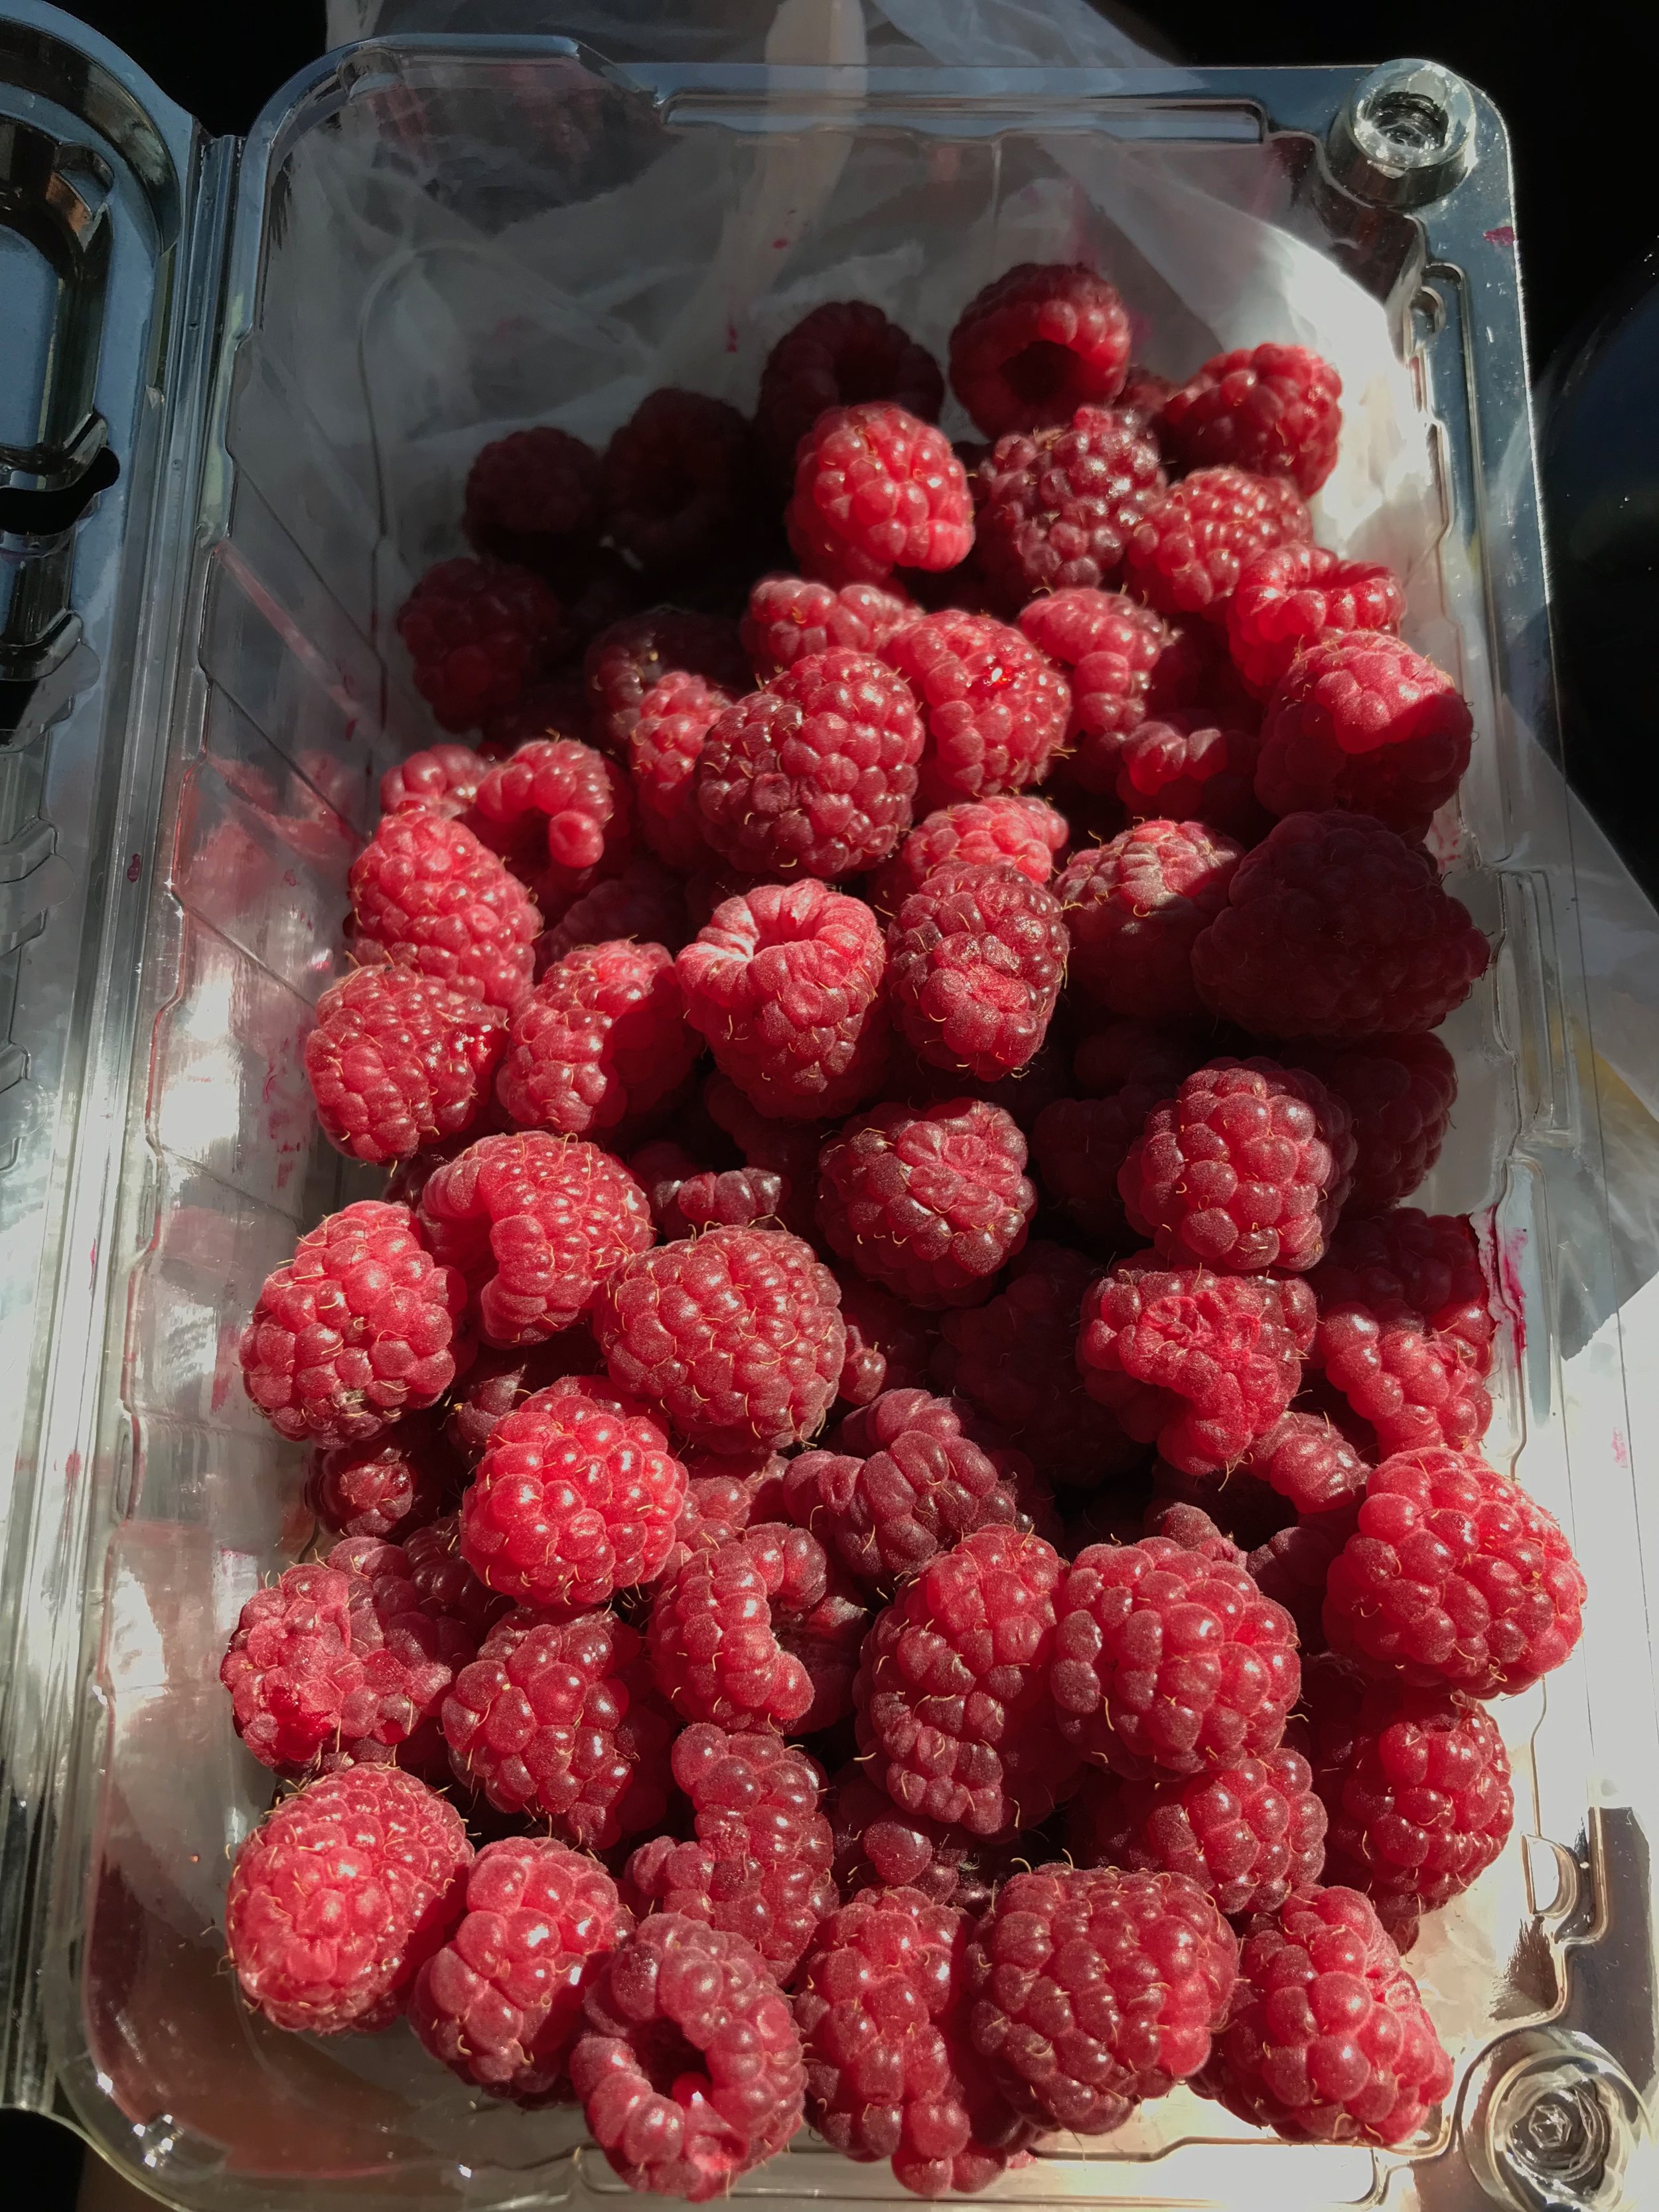 Raspberries in Chile